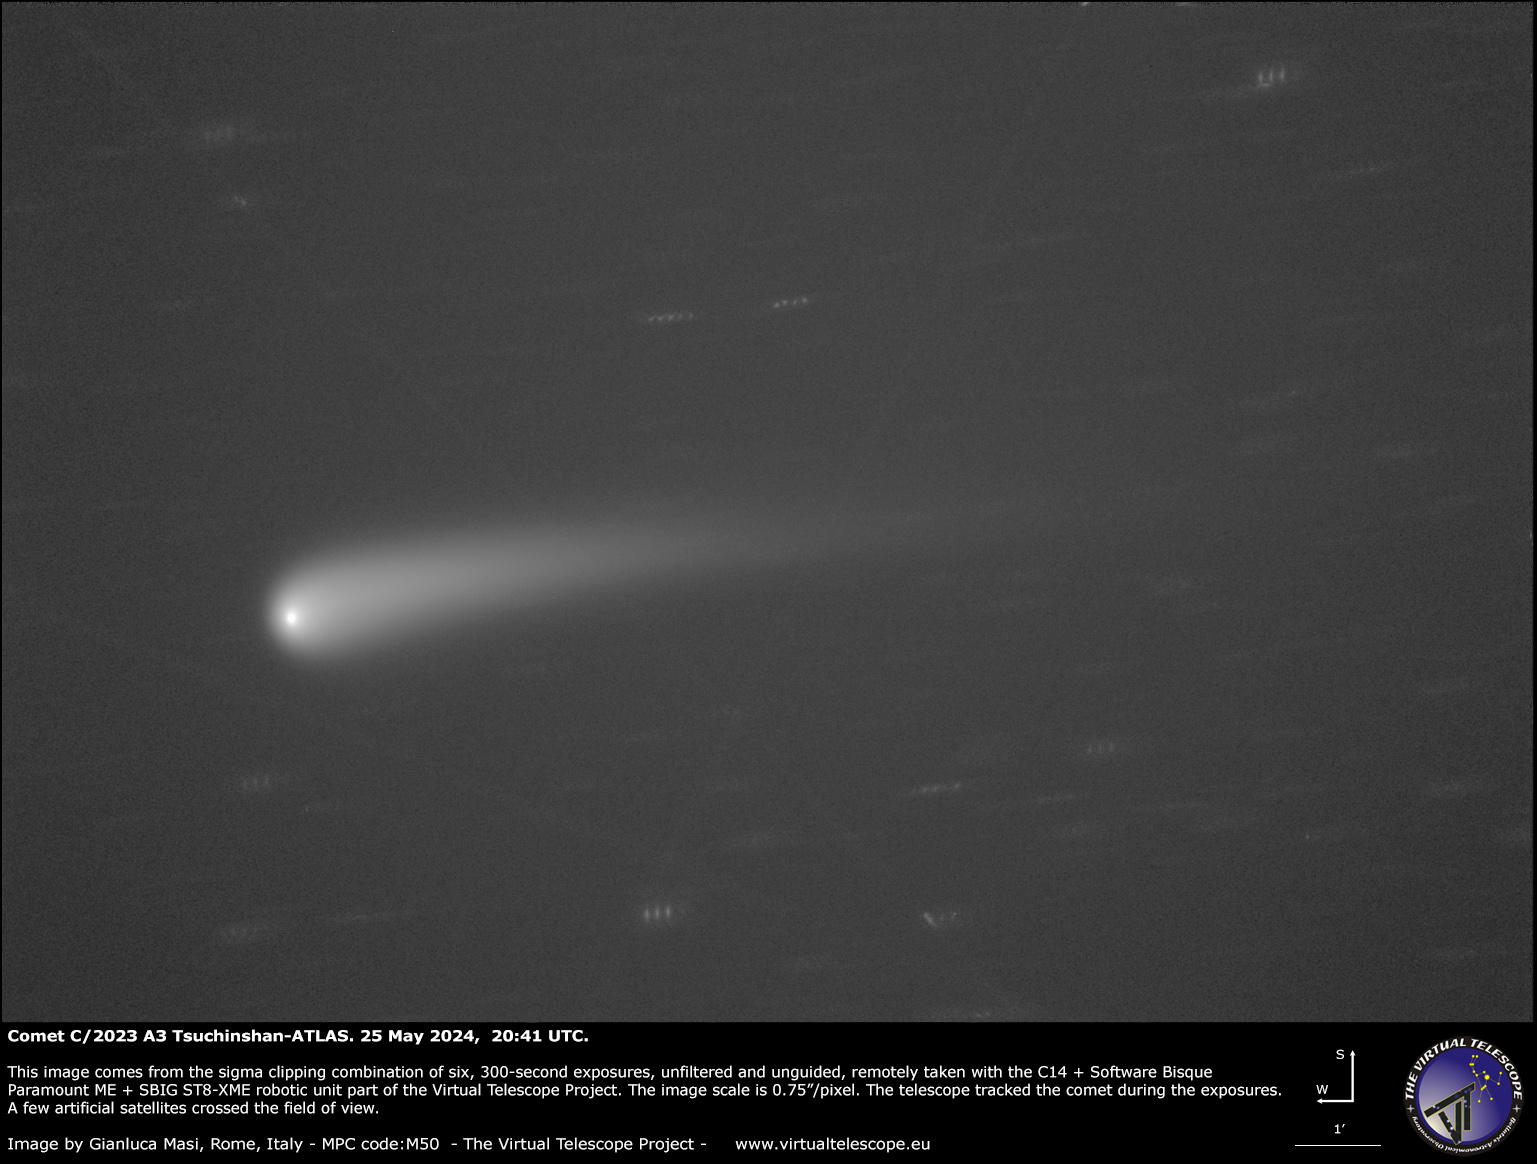 Comet C/2023 A3 TsuchinshanATLAS a new image 25 May 2024. The